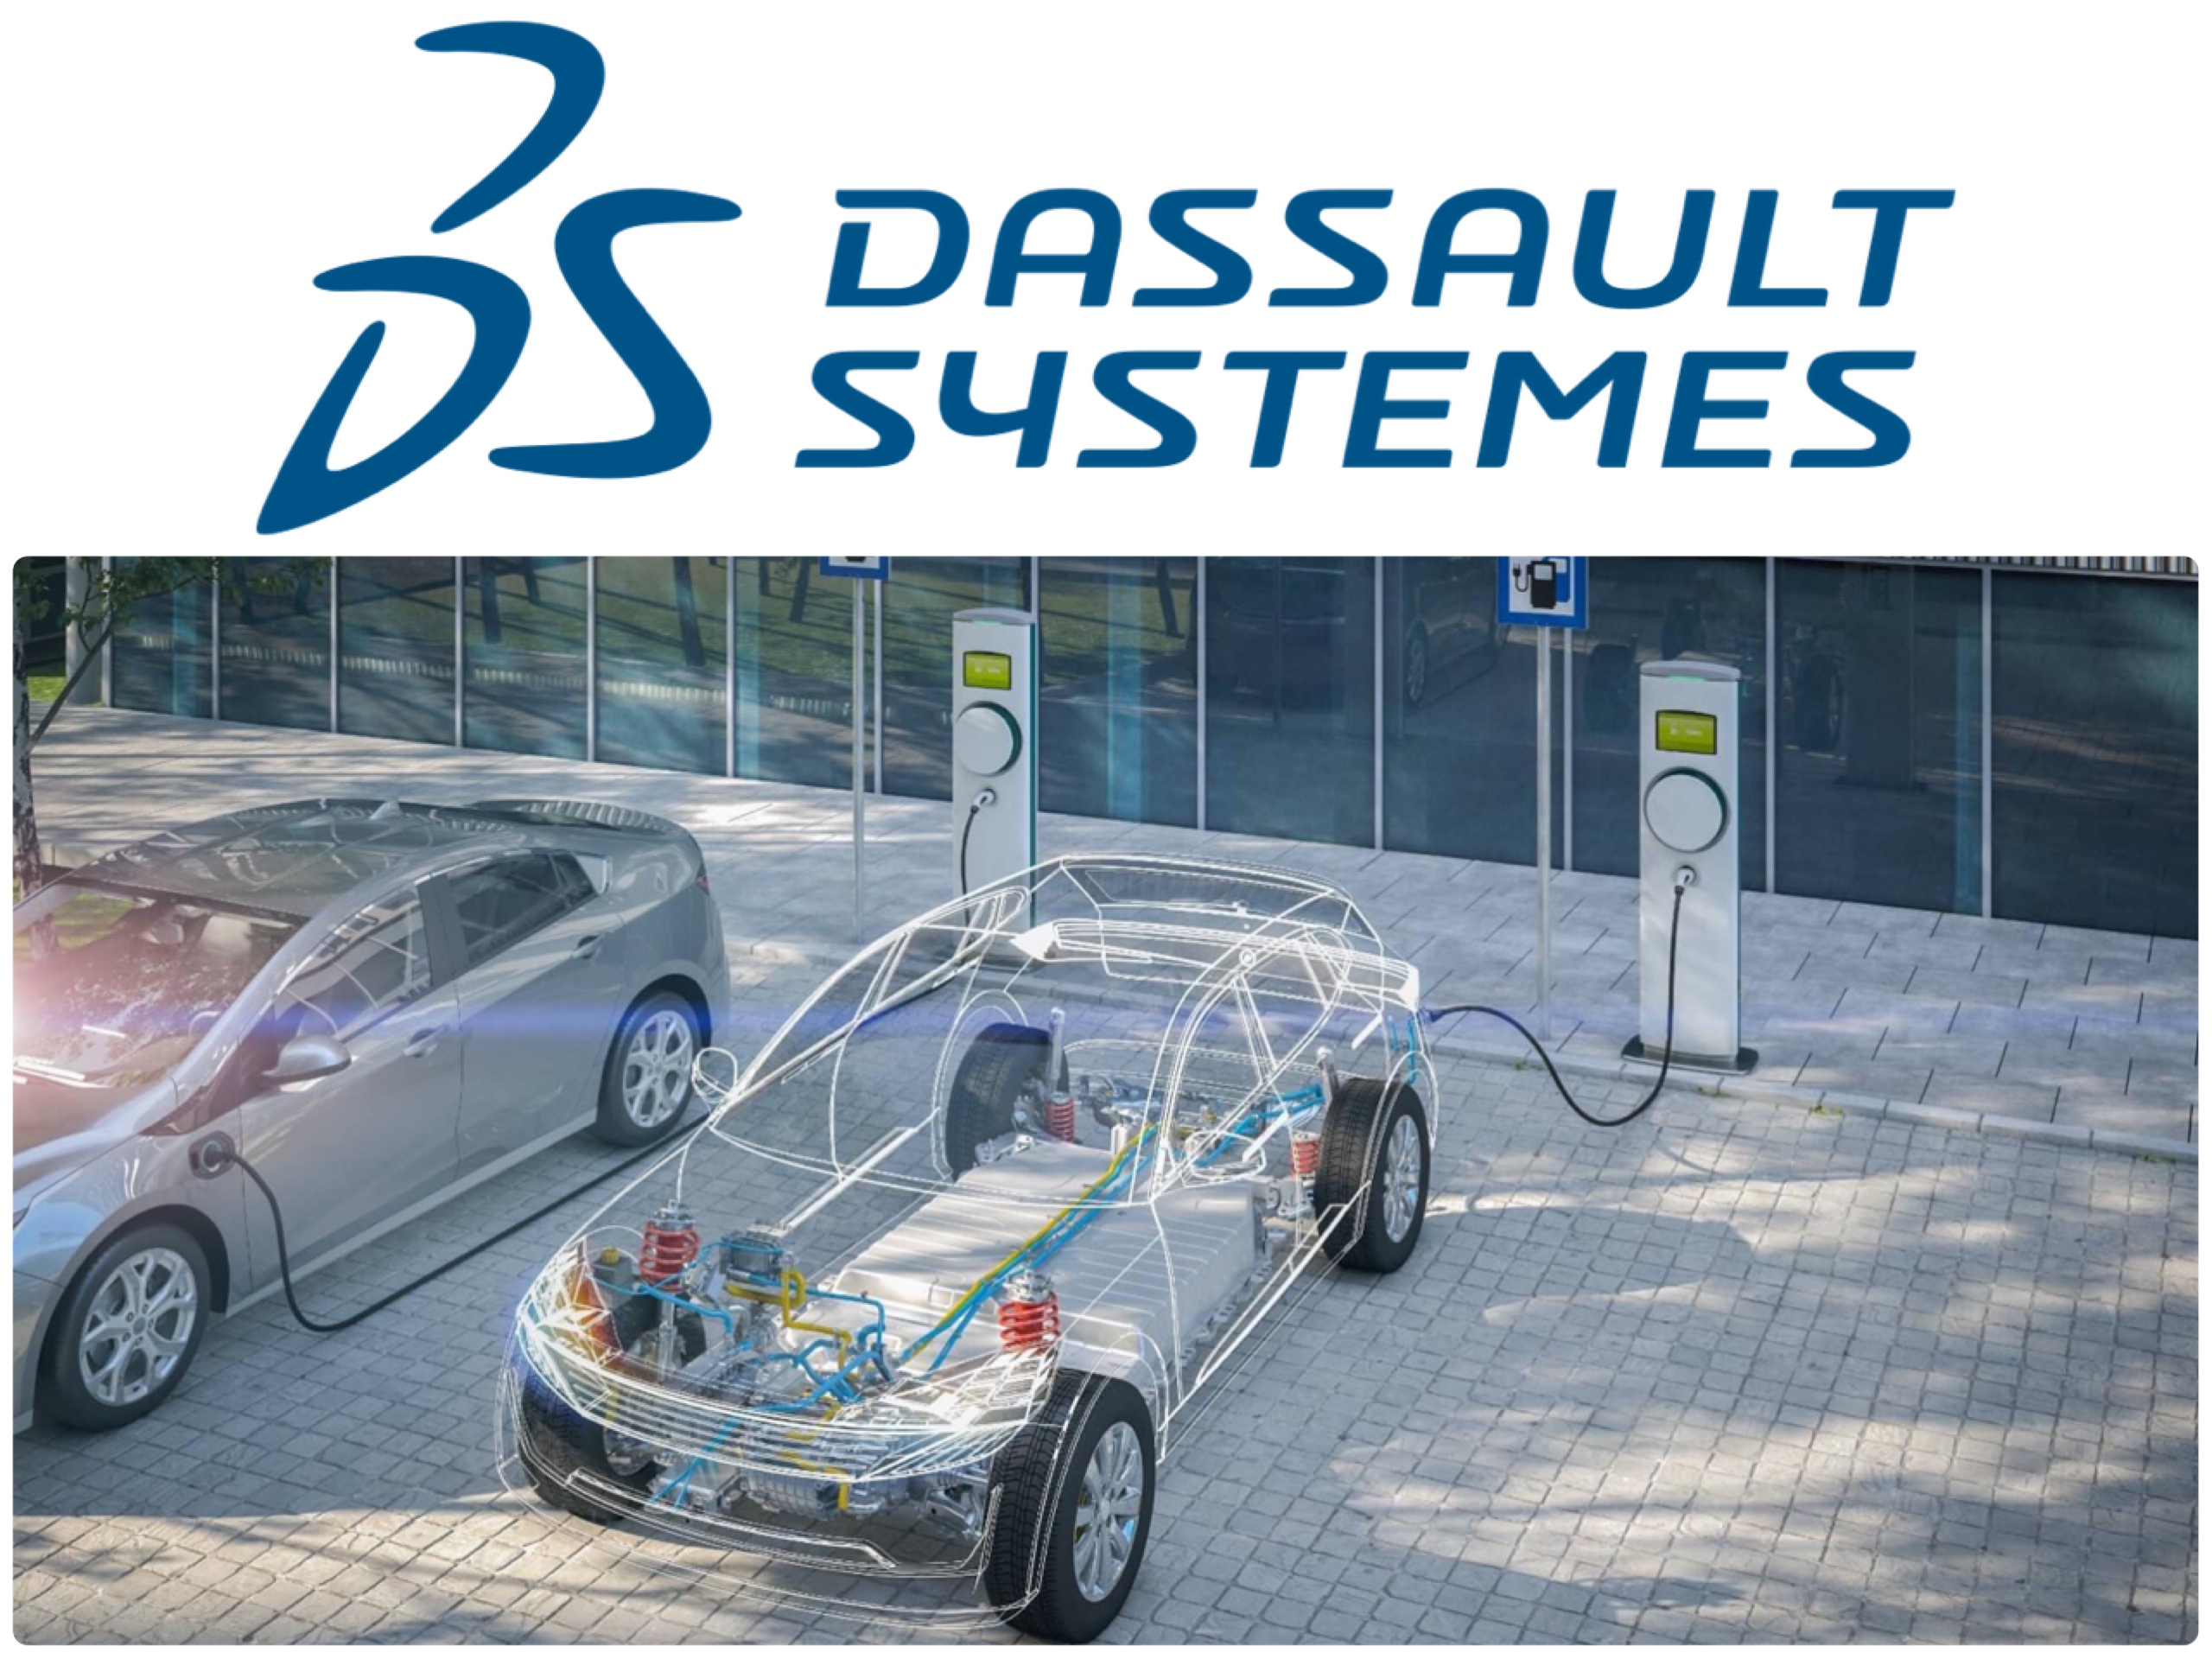 Dassault Systèmes เผยเทคโนโลยี “Virtual Twin” คือหัวใจสำคัญต่อการพลิกโฉมอุตสาหกรรมยานยนต์ในไทยสู่อนาคตความยั่งยืน 